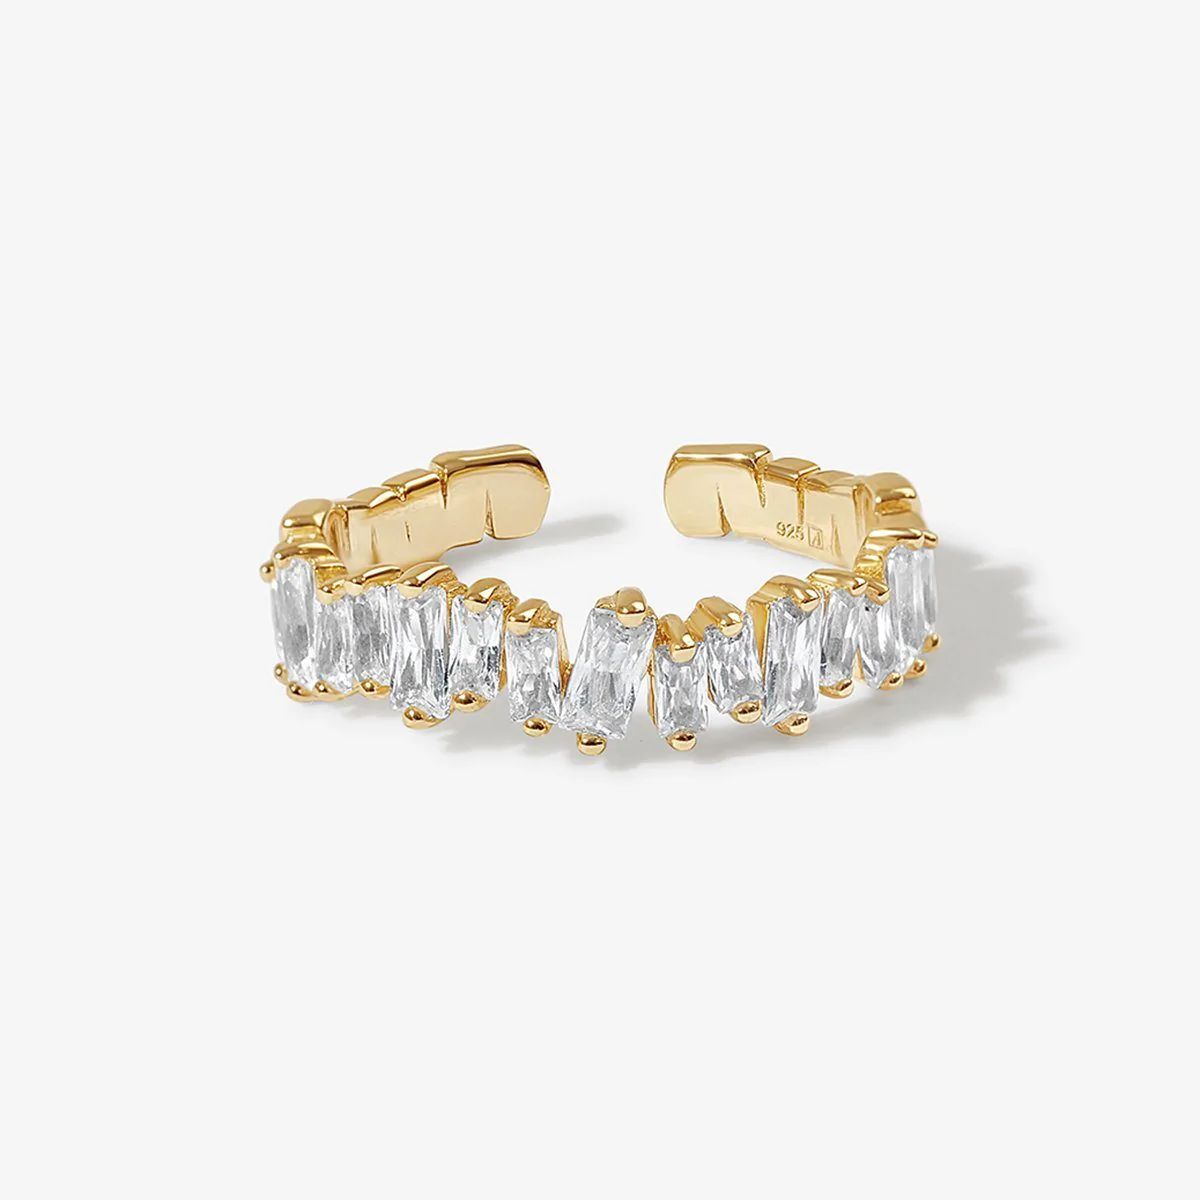 Roger crystal ring | Adornmonde